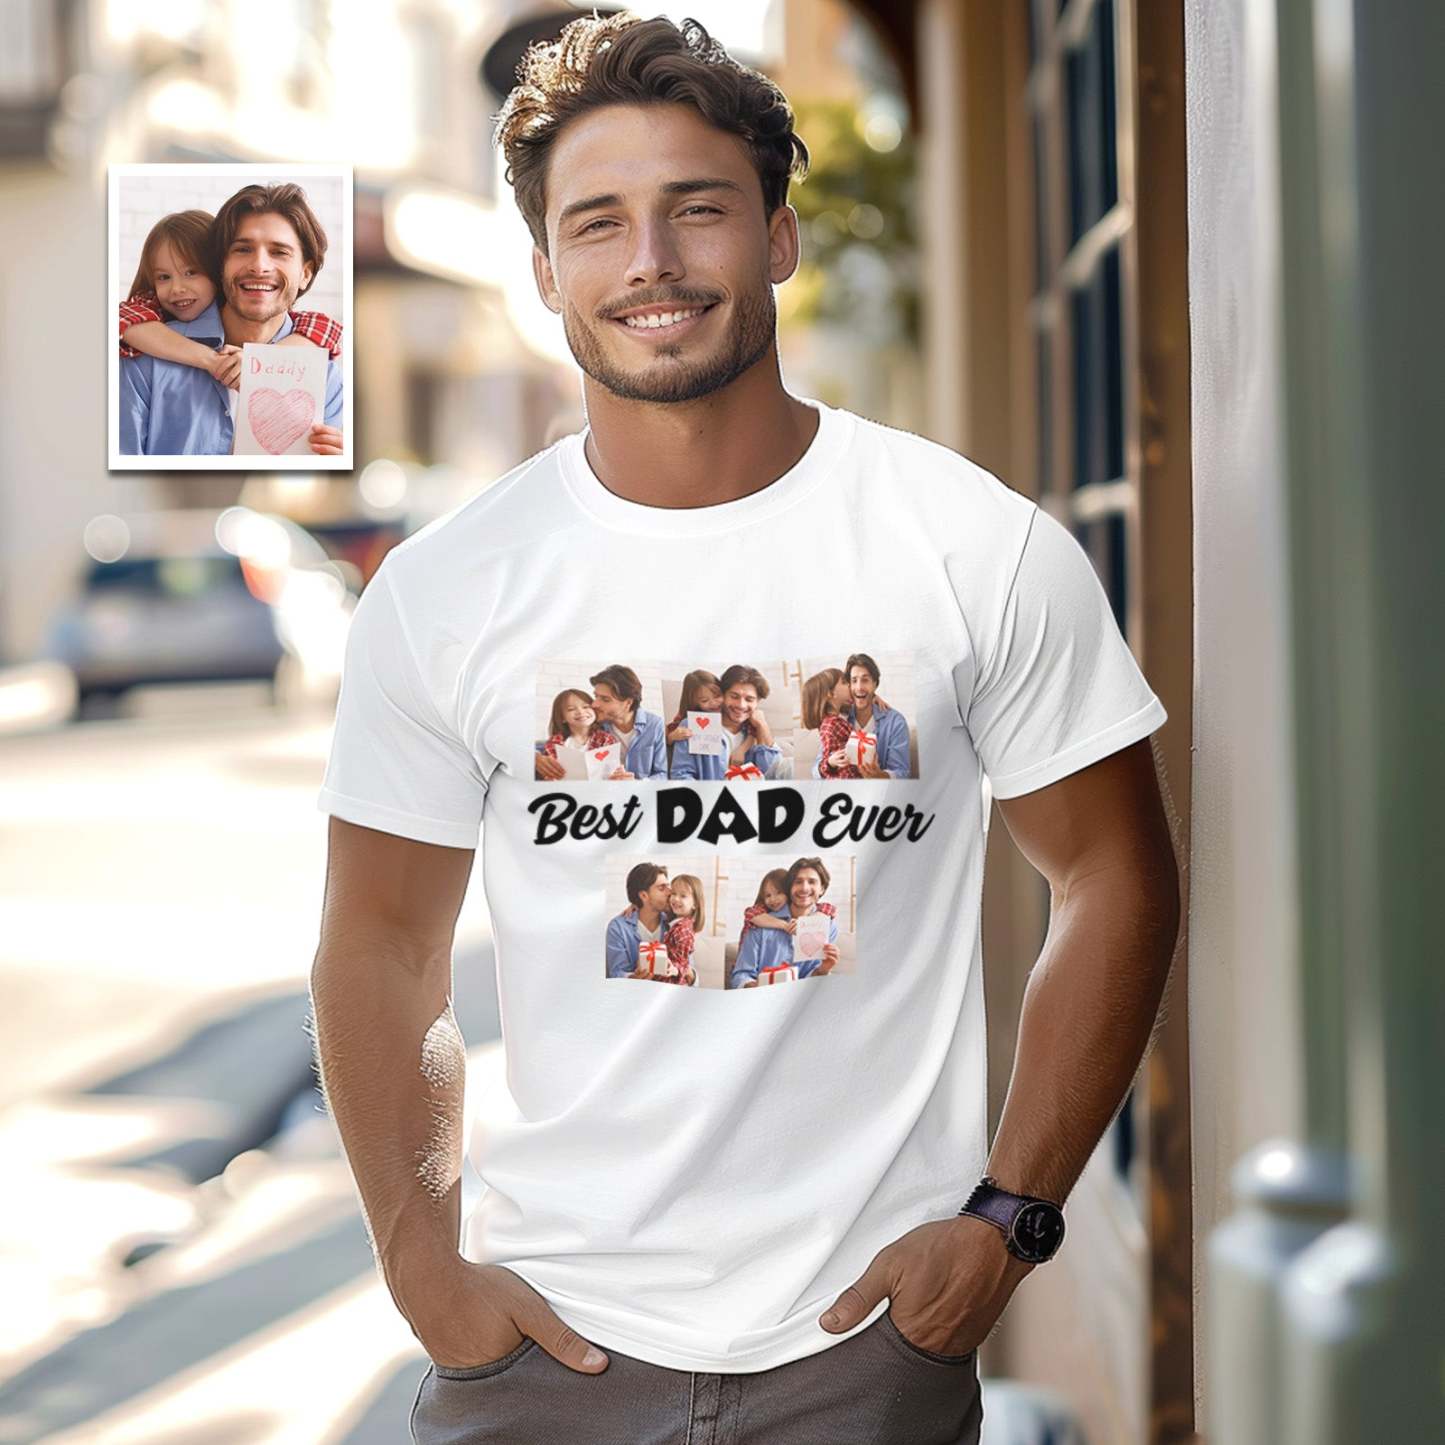 Individuelles 5-fotos-t-shirt Mit Dem Besten Vater Aller Zeiten, Personalisiertes Fotos-t-shirt, Vatertagsgeschenk - FotoSocken